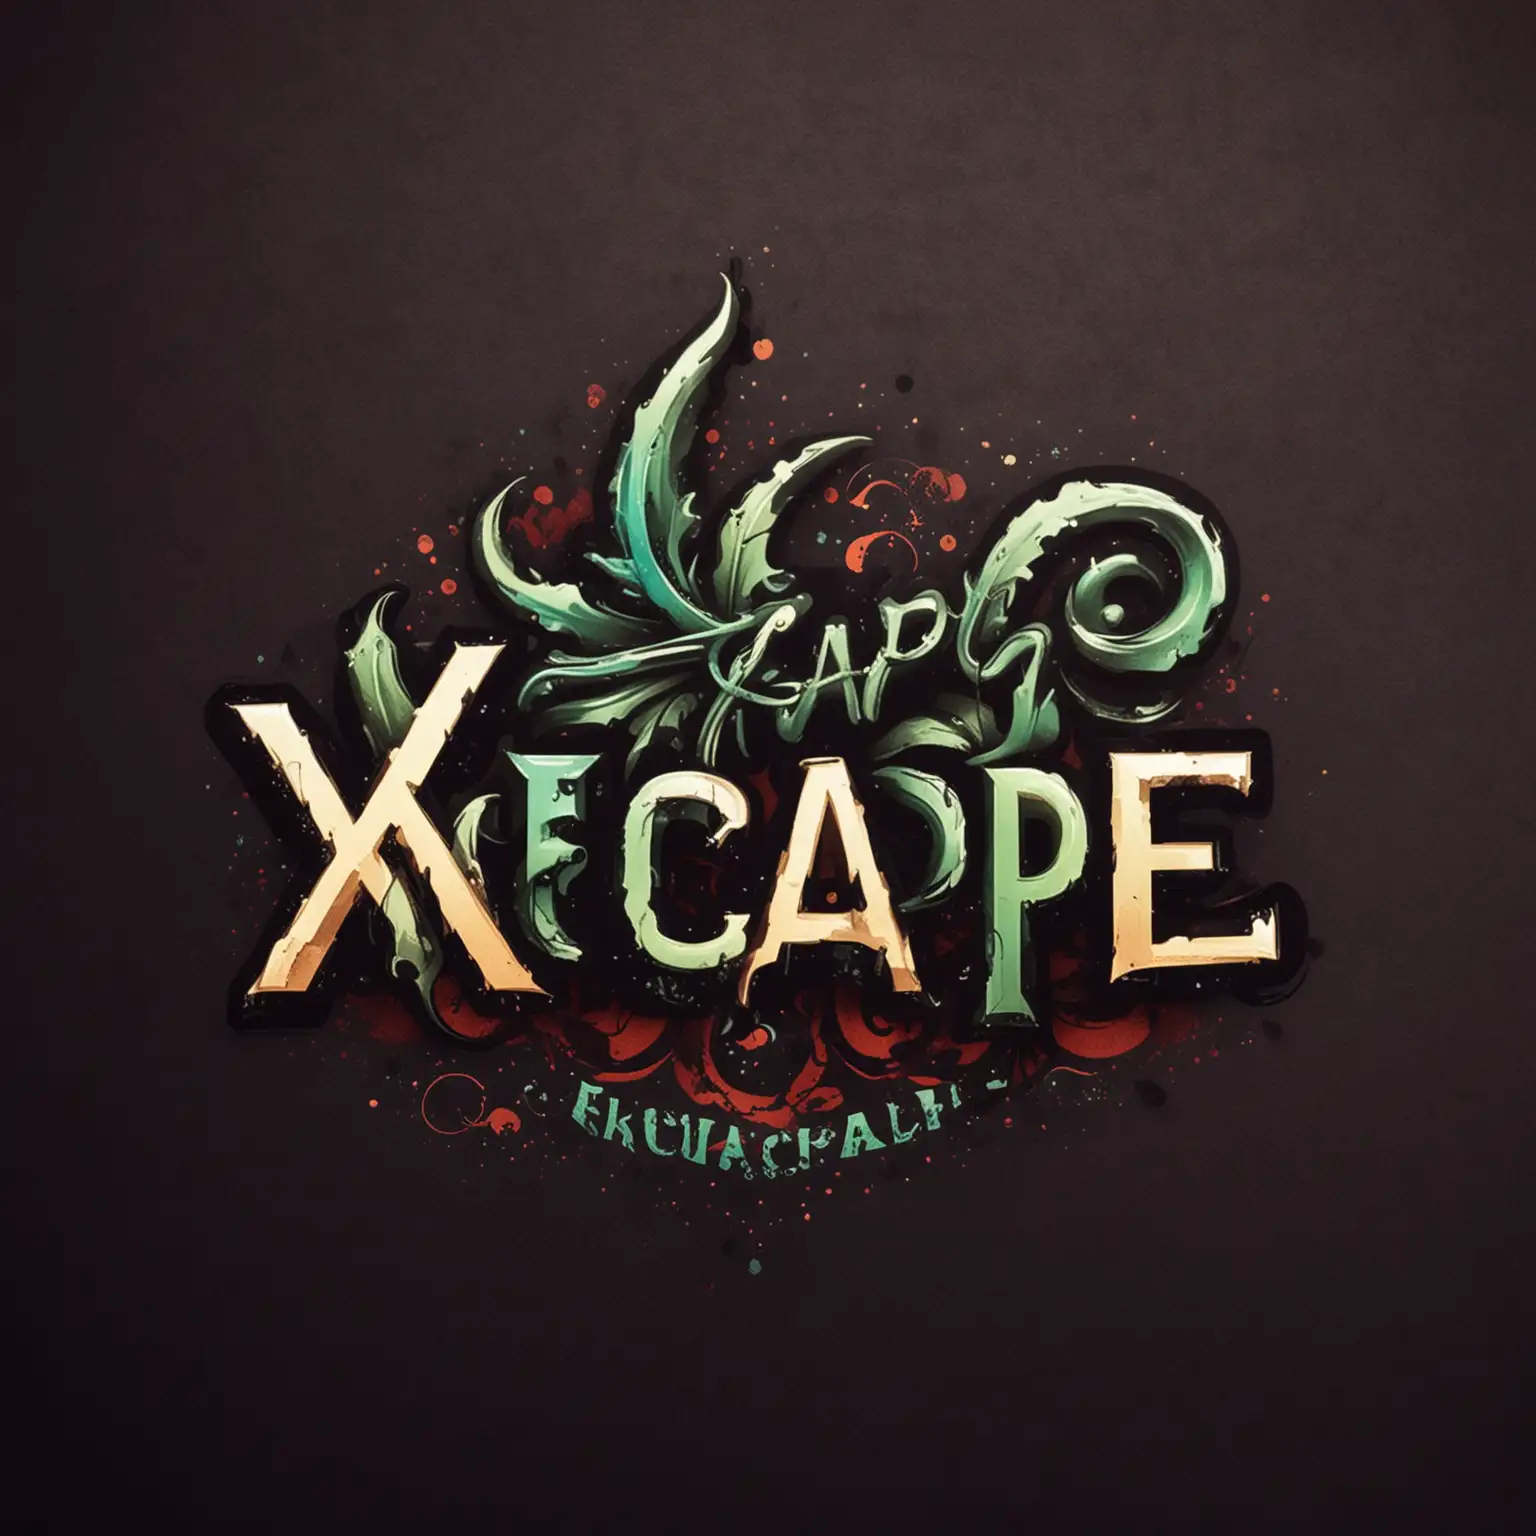 Xscape Hookah Bar Logo Design Stylish Typography with Smoke Accents